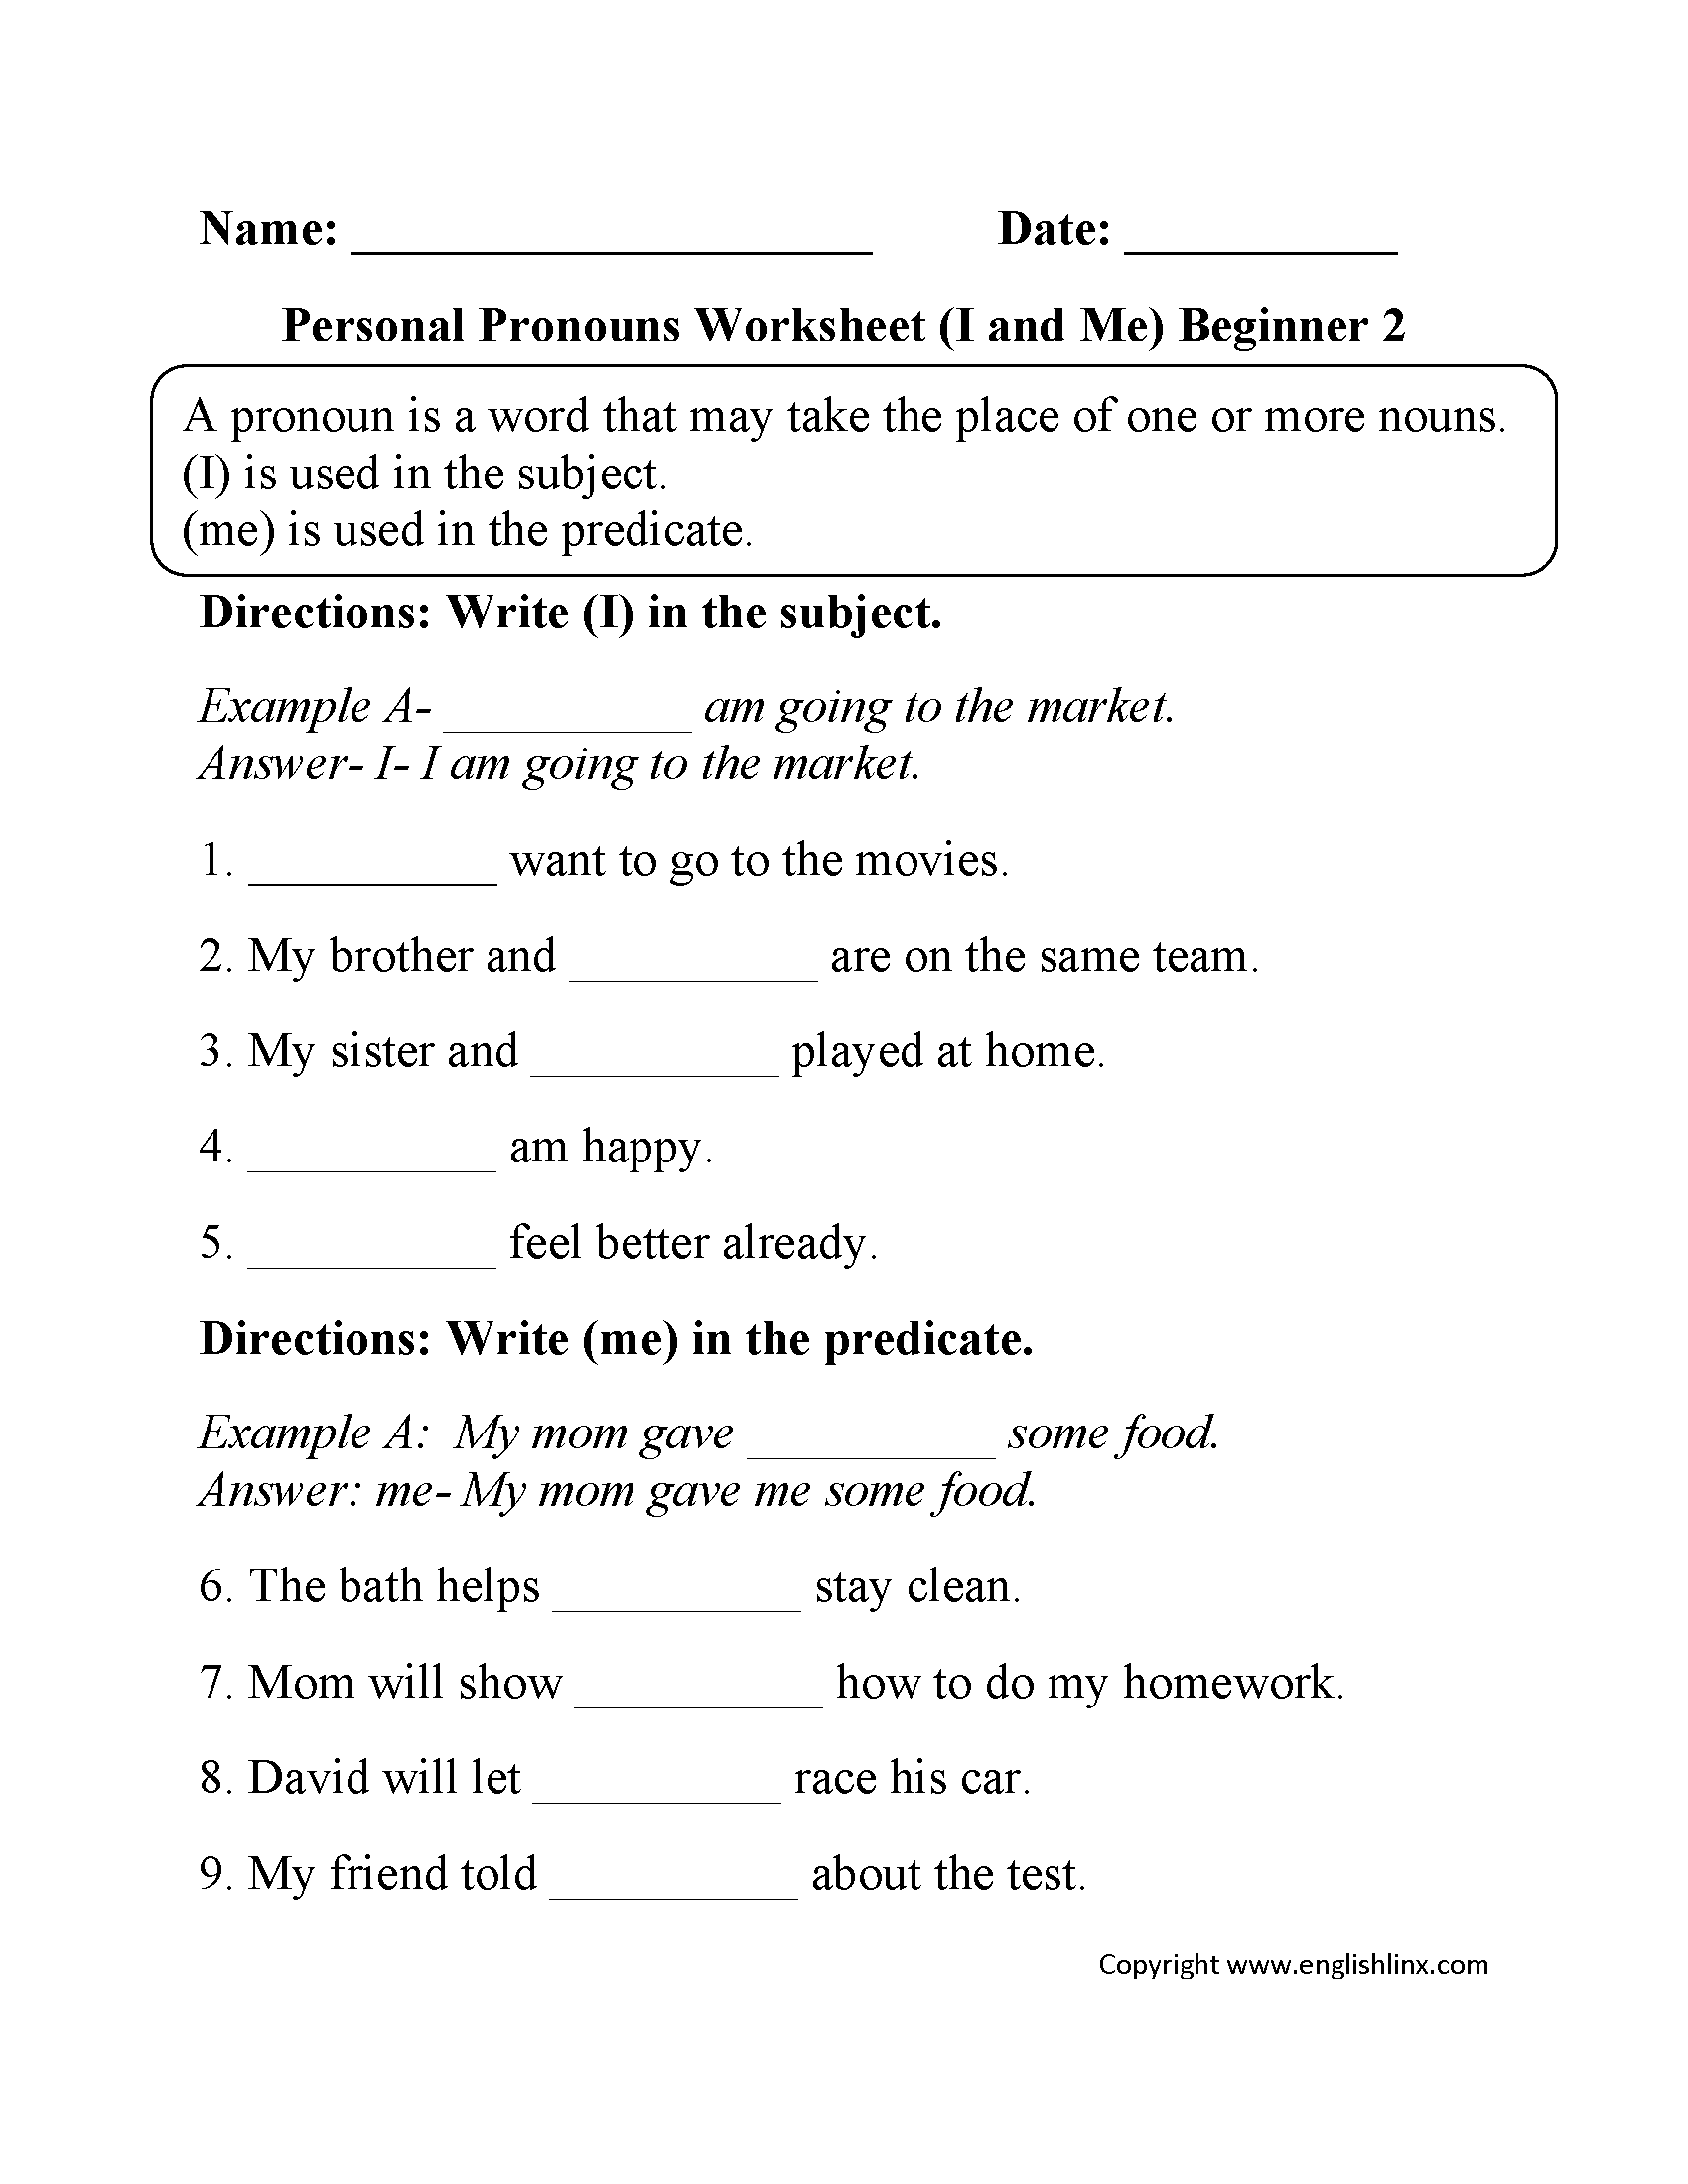 Pronouns Worksheets Personal Pronouns Worksheets